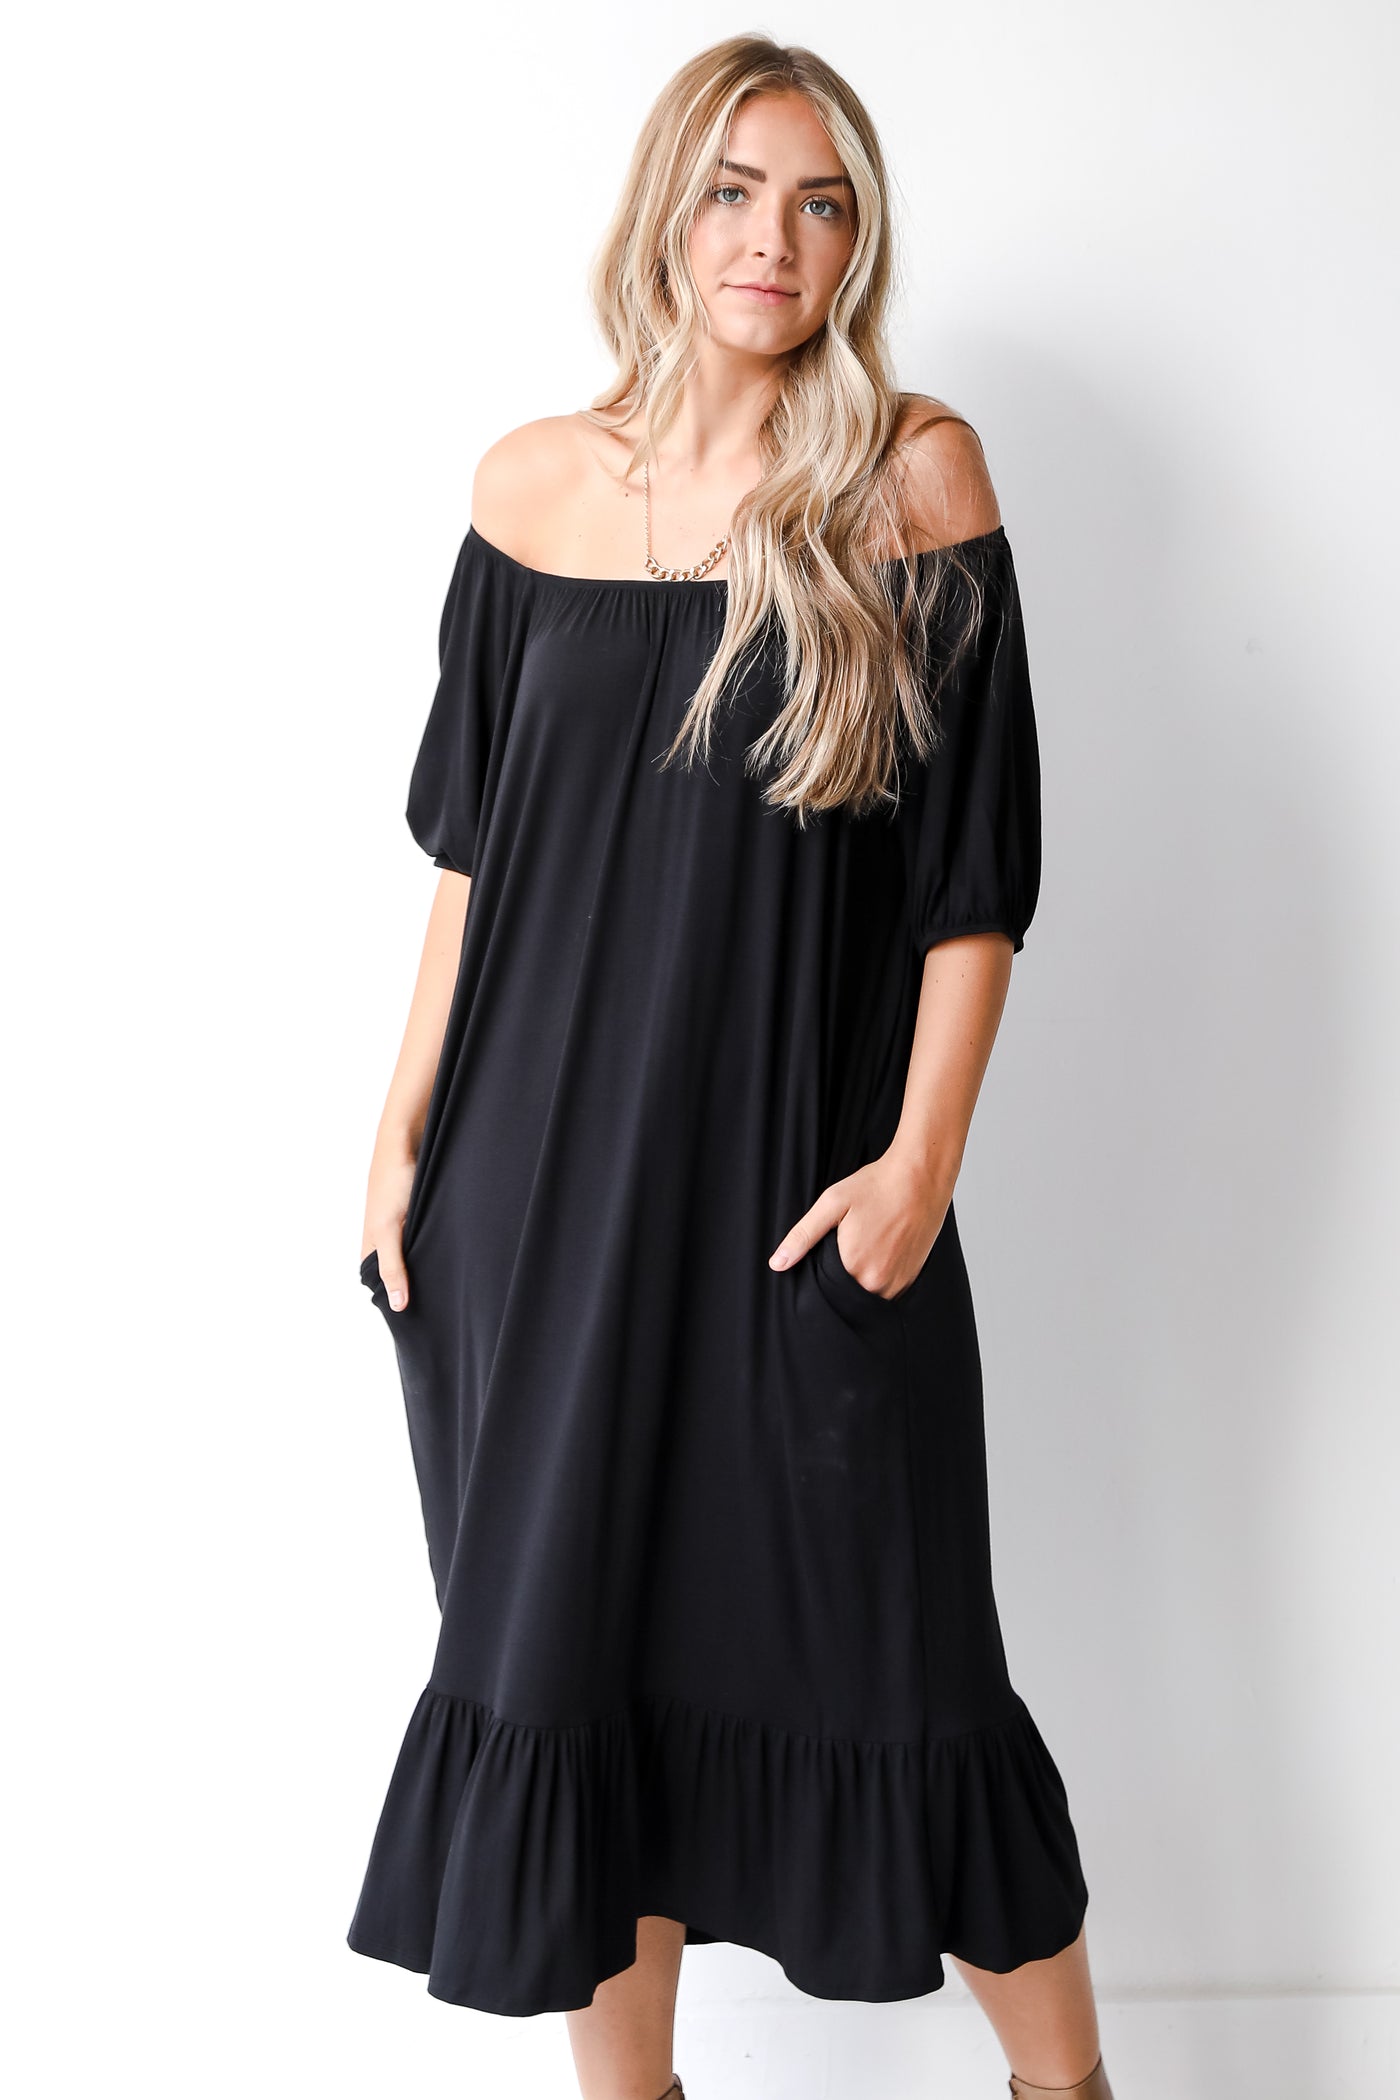 long black dress on model